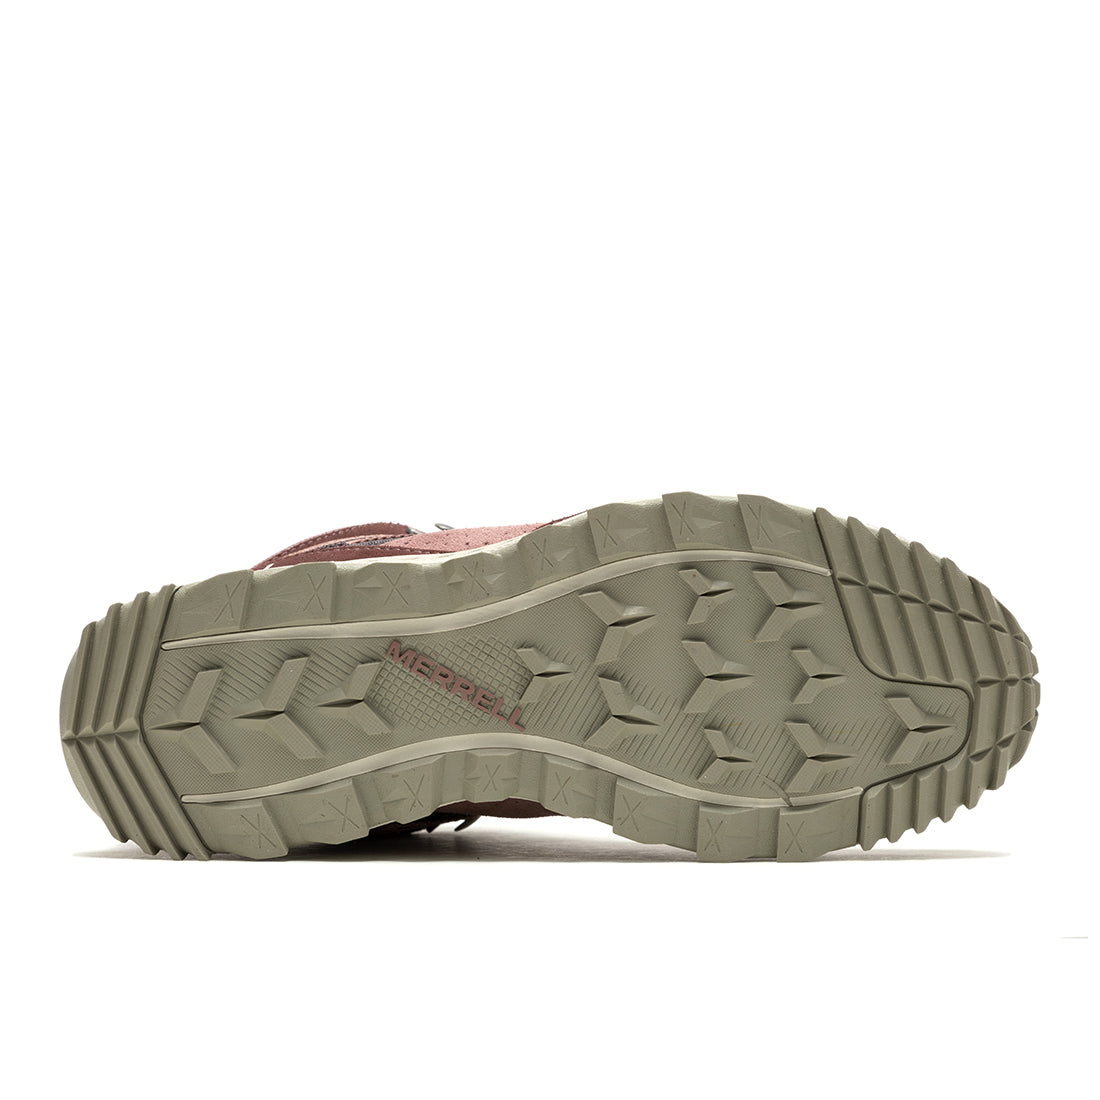 Wildwood Mid Ltr Wprf - Marron/Burlwood Womens Trail Running Shoes